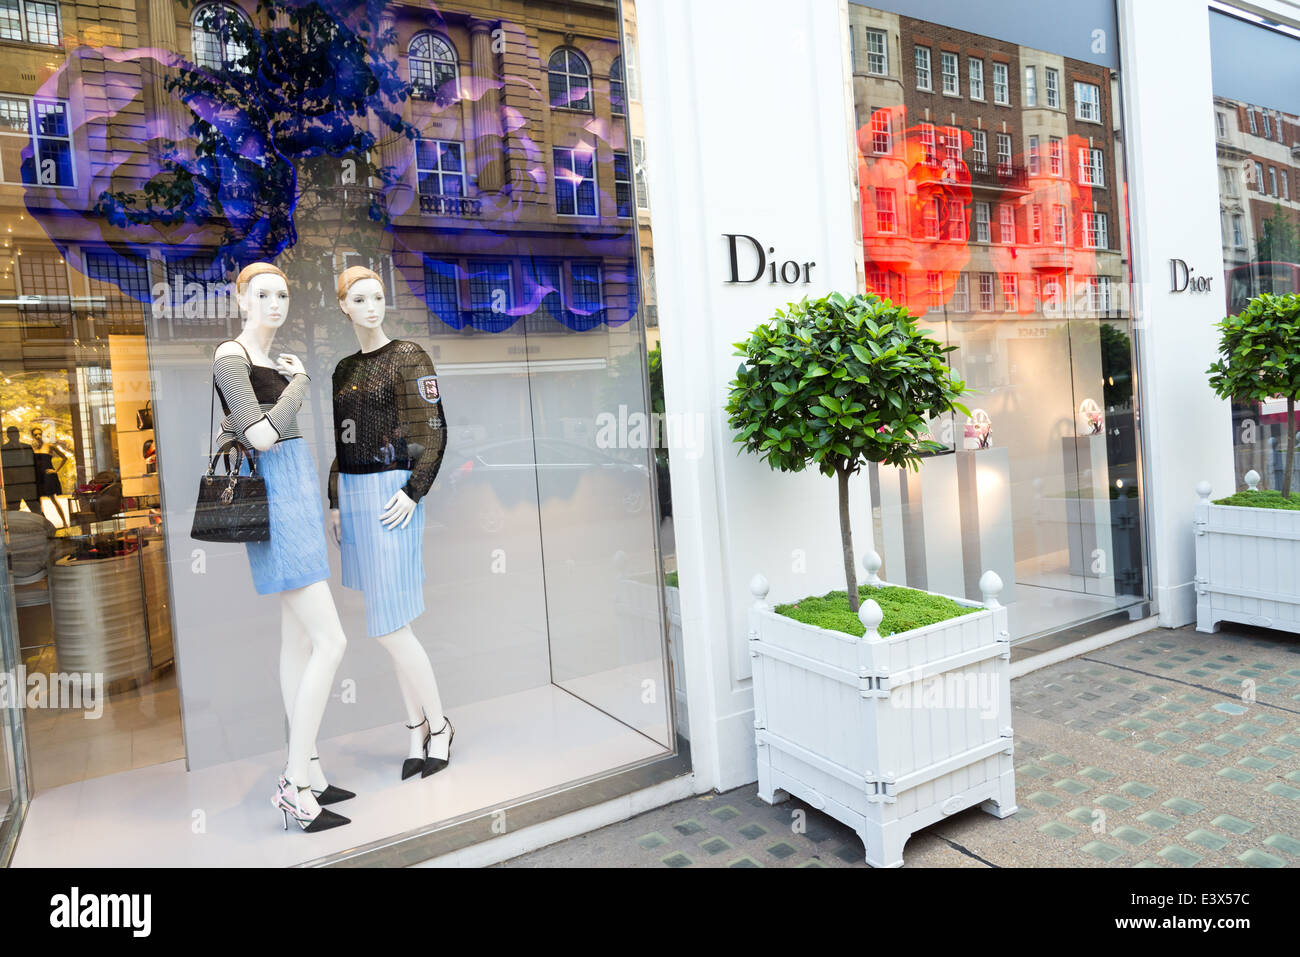 Dior luxury designer clothes shop on Sloane Street, London, England, UK Stock Photo